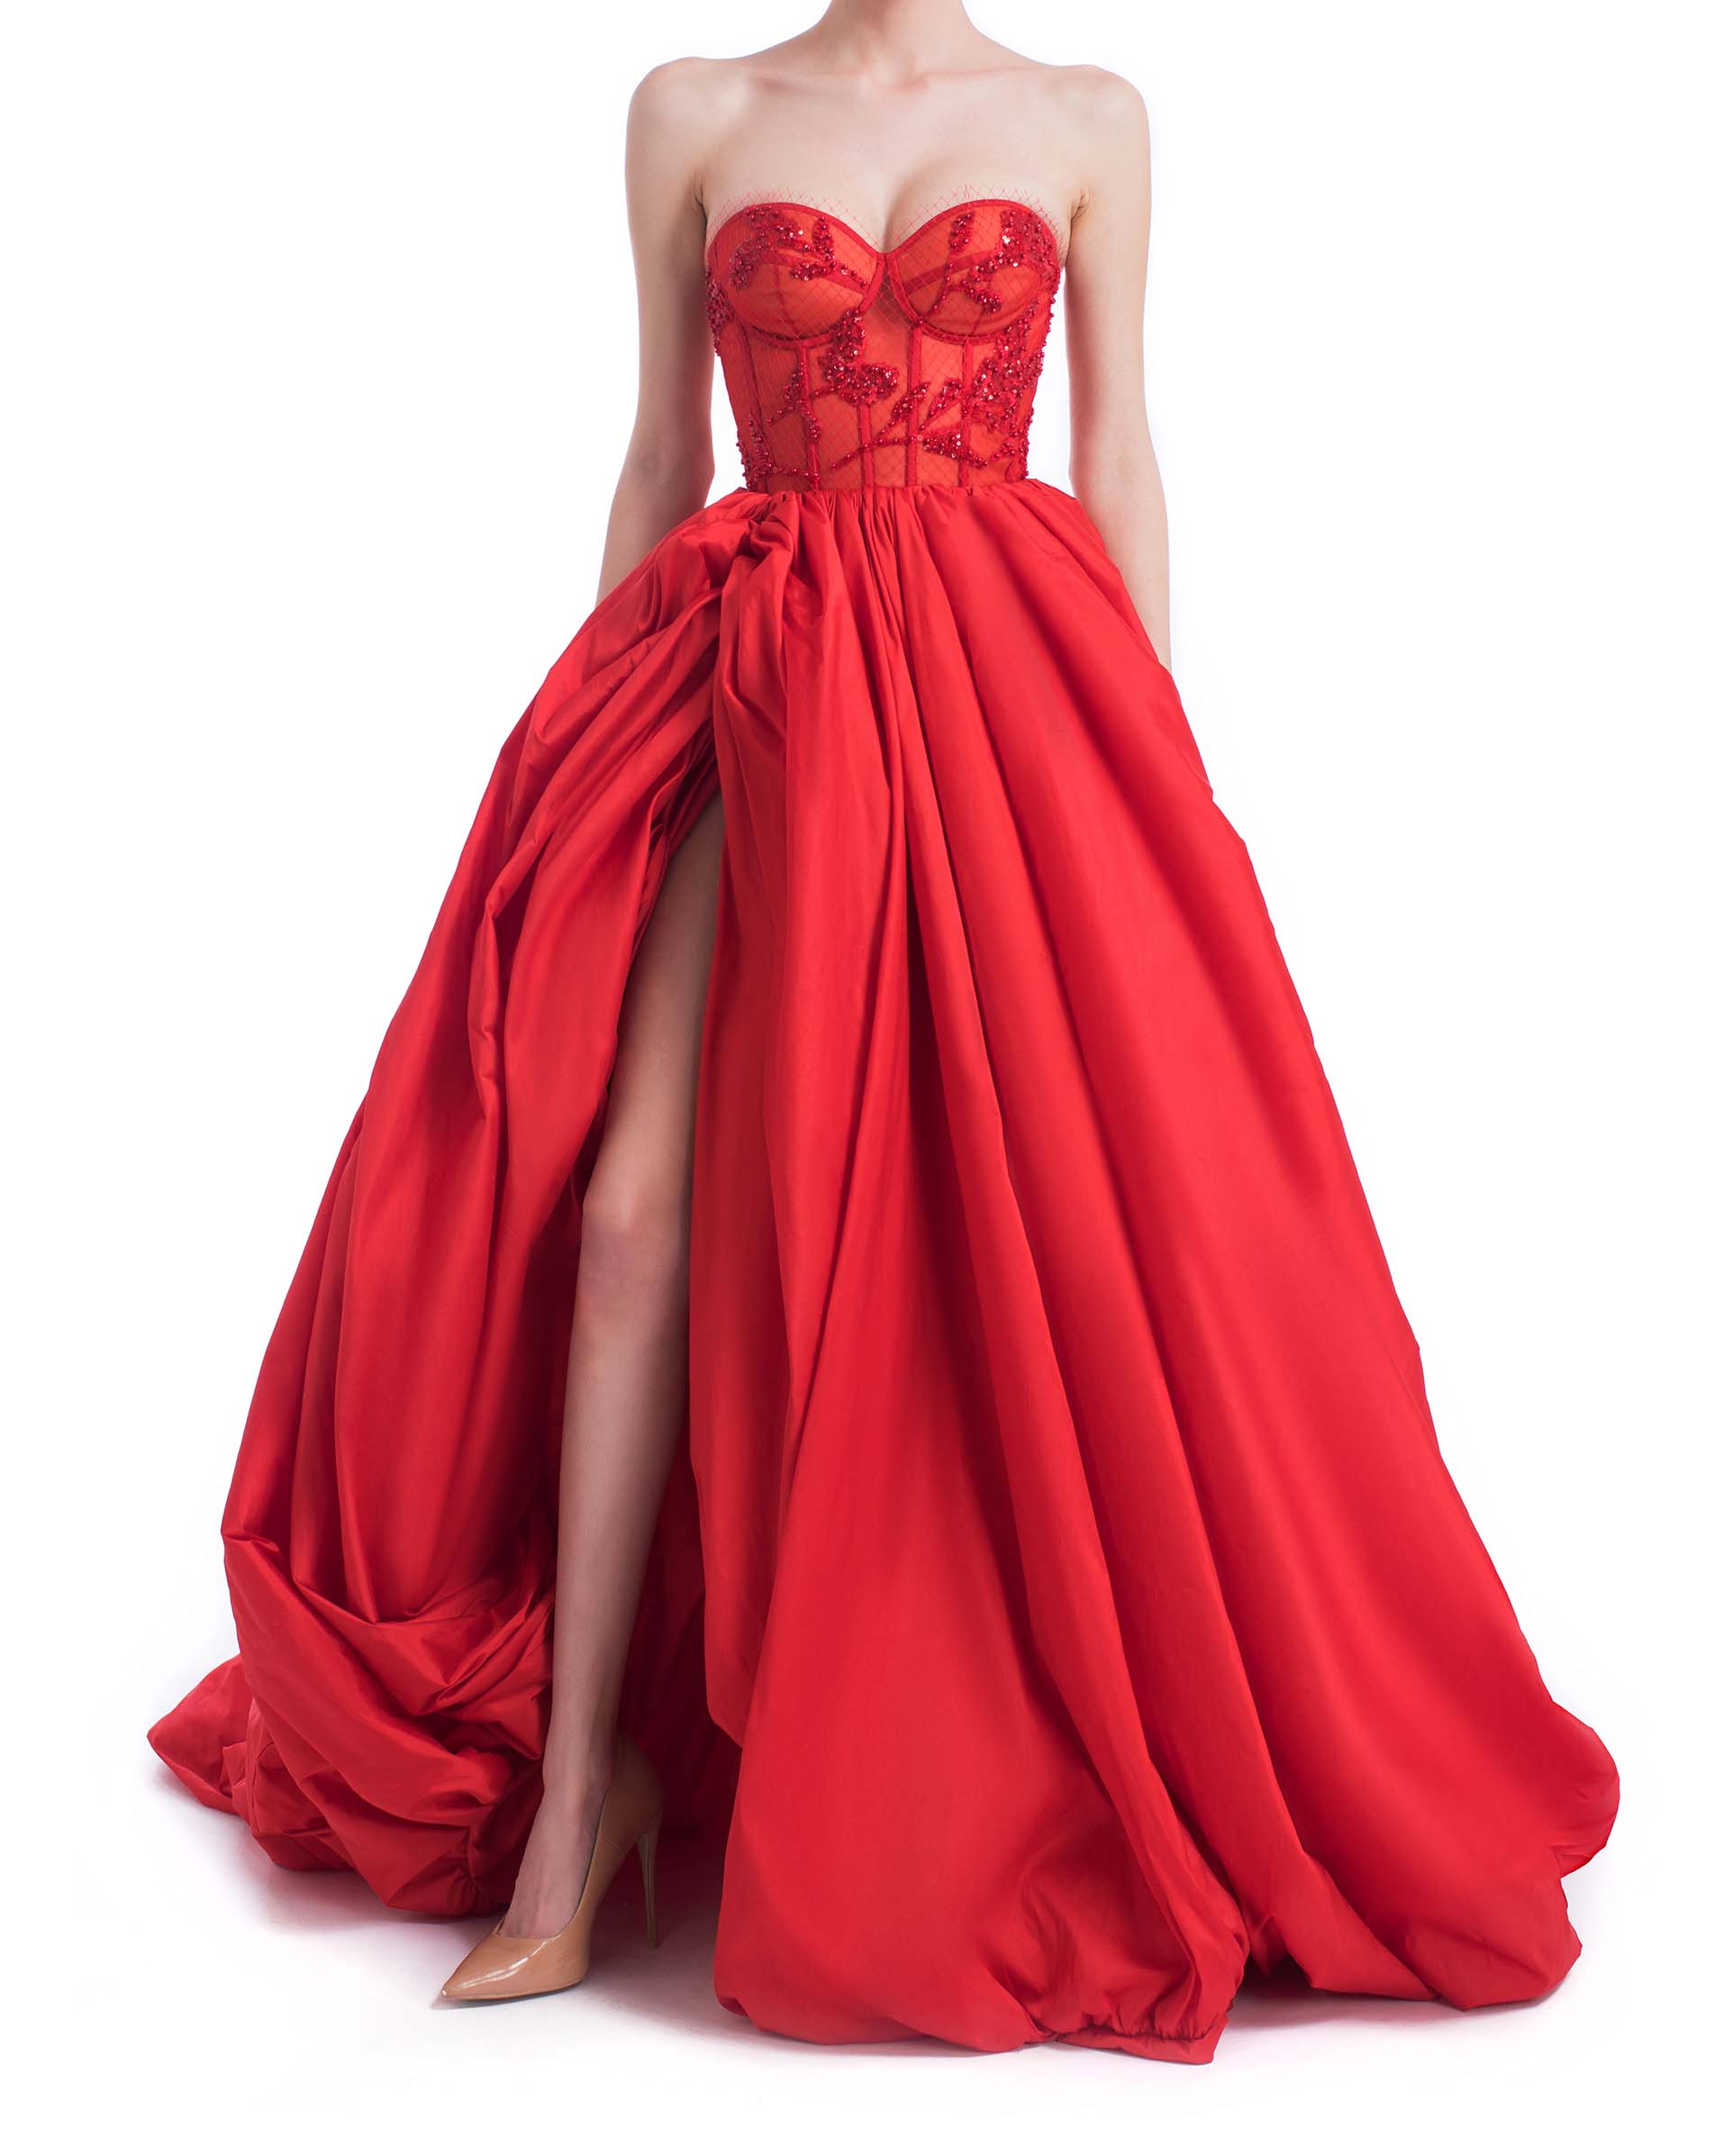 Red taffeta beaded corset gown